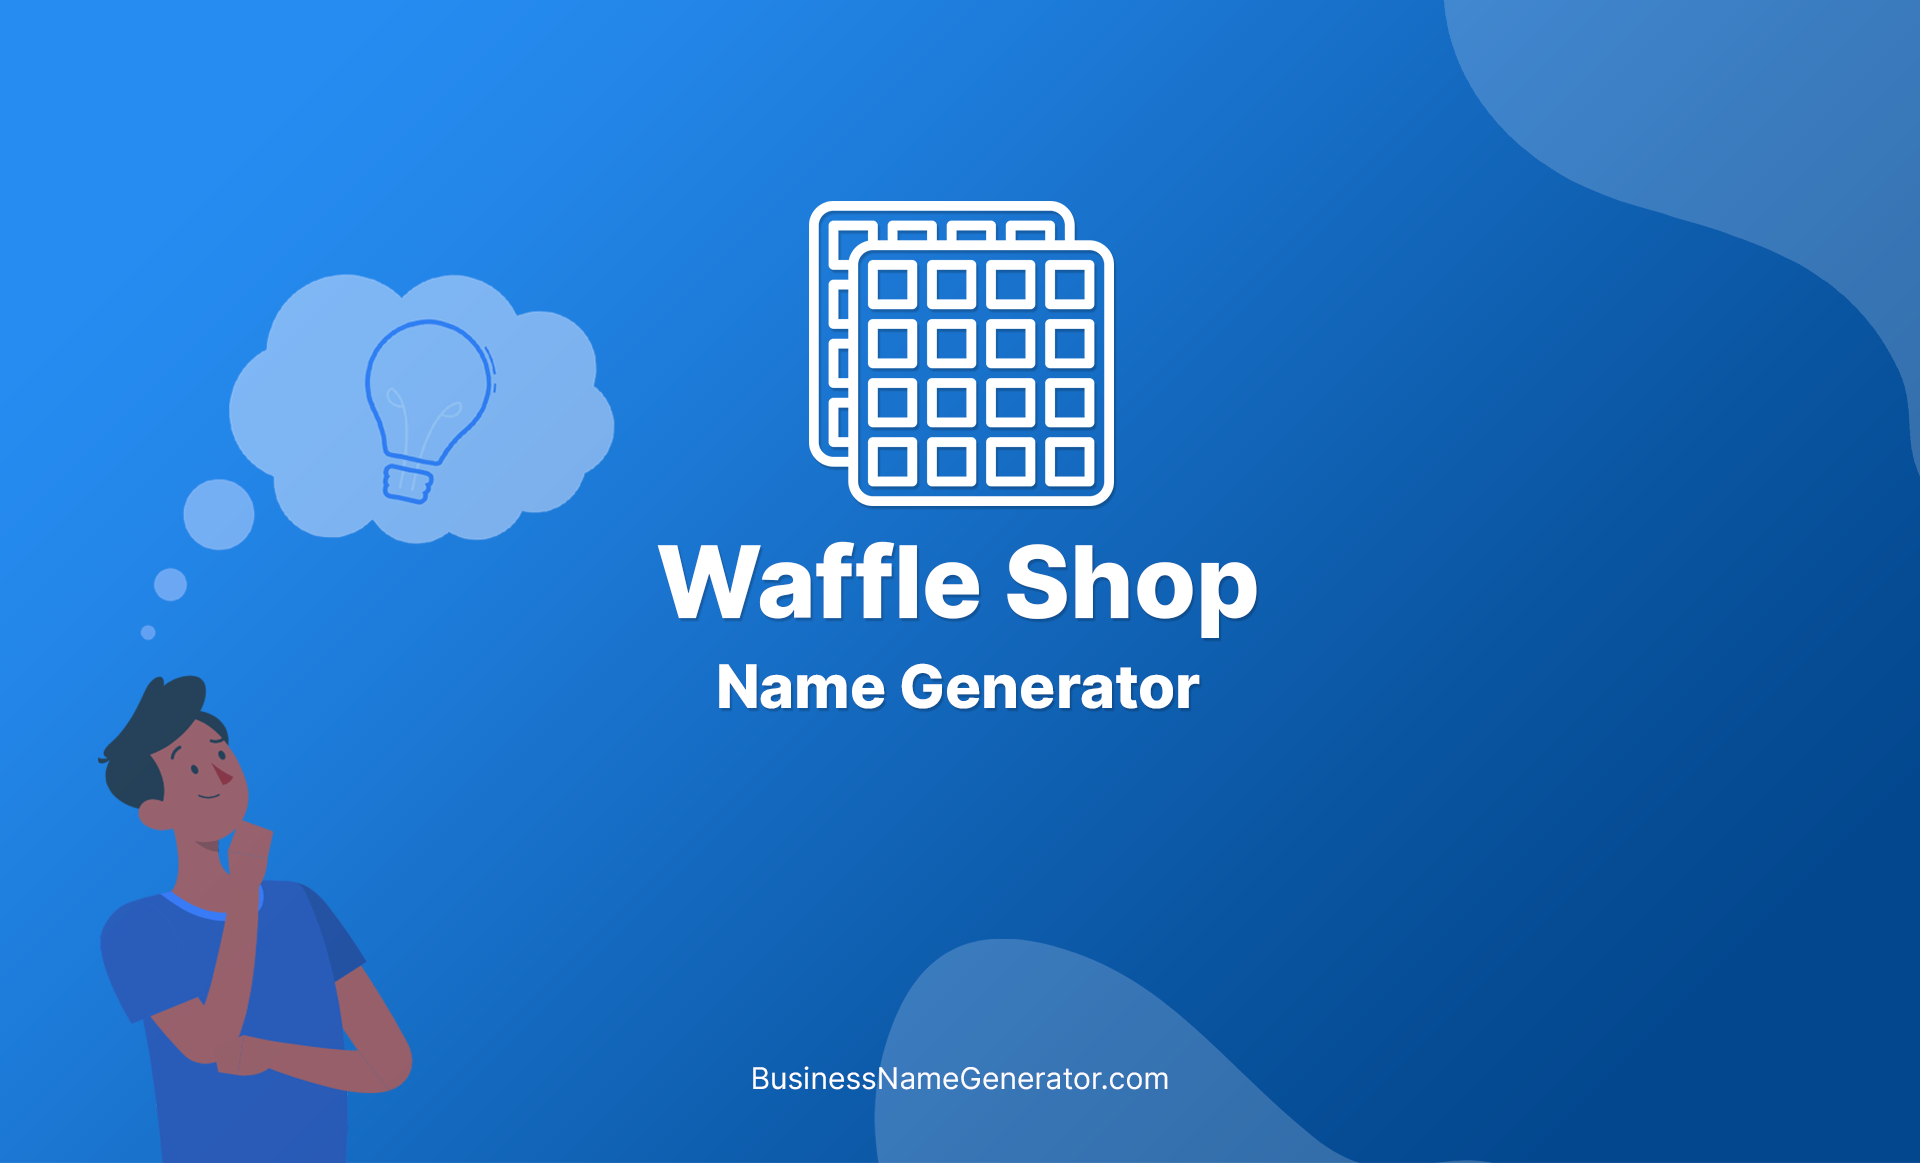 Waffle Shop Name Generator